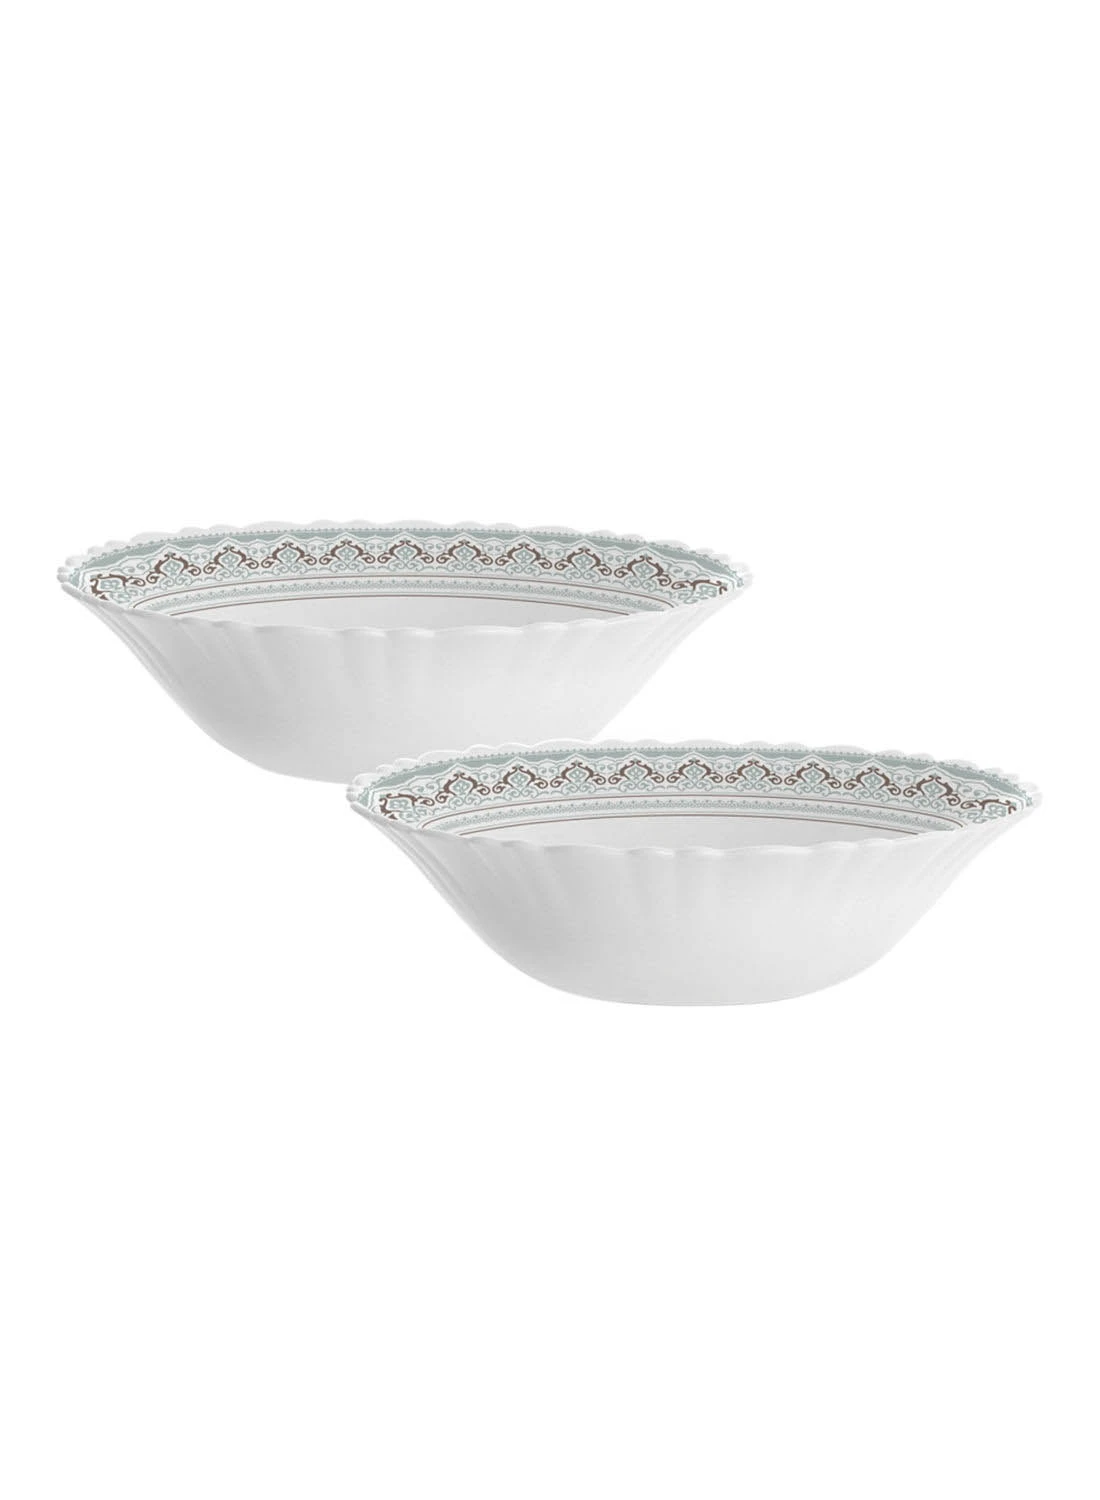 BOROSIL 2 Piece Opalware Bowl Set For Everyday Use - Light Weight - For Soup, Salad, Dessert - Bowl Set - Soup Set - Bowls - Soup Dishes - Salad Bowl - Serves 2 - White/Grey